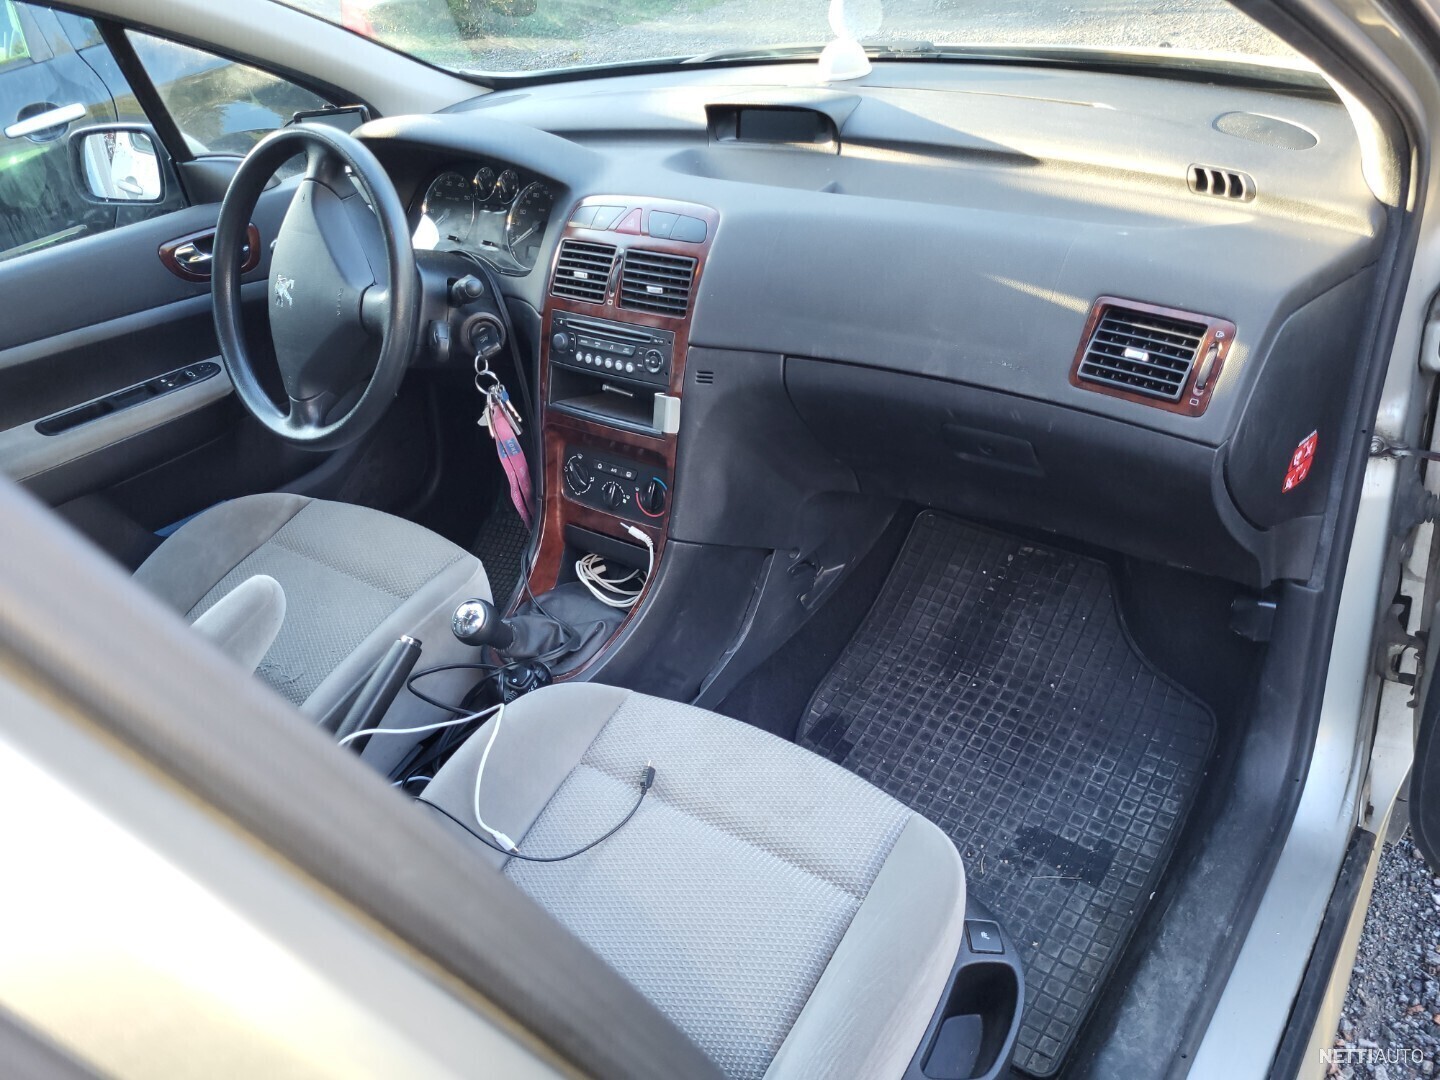 Peugeot 307 2.0 HDI XT interior 